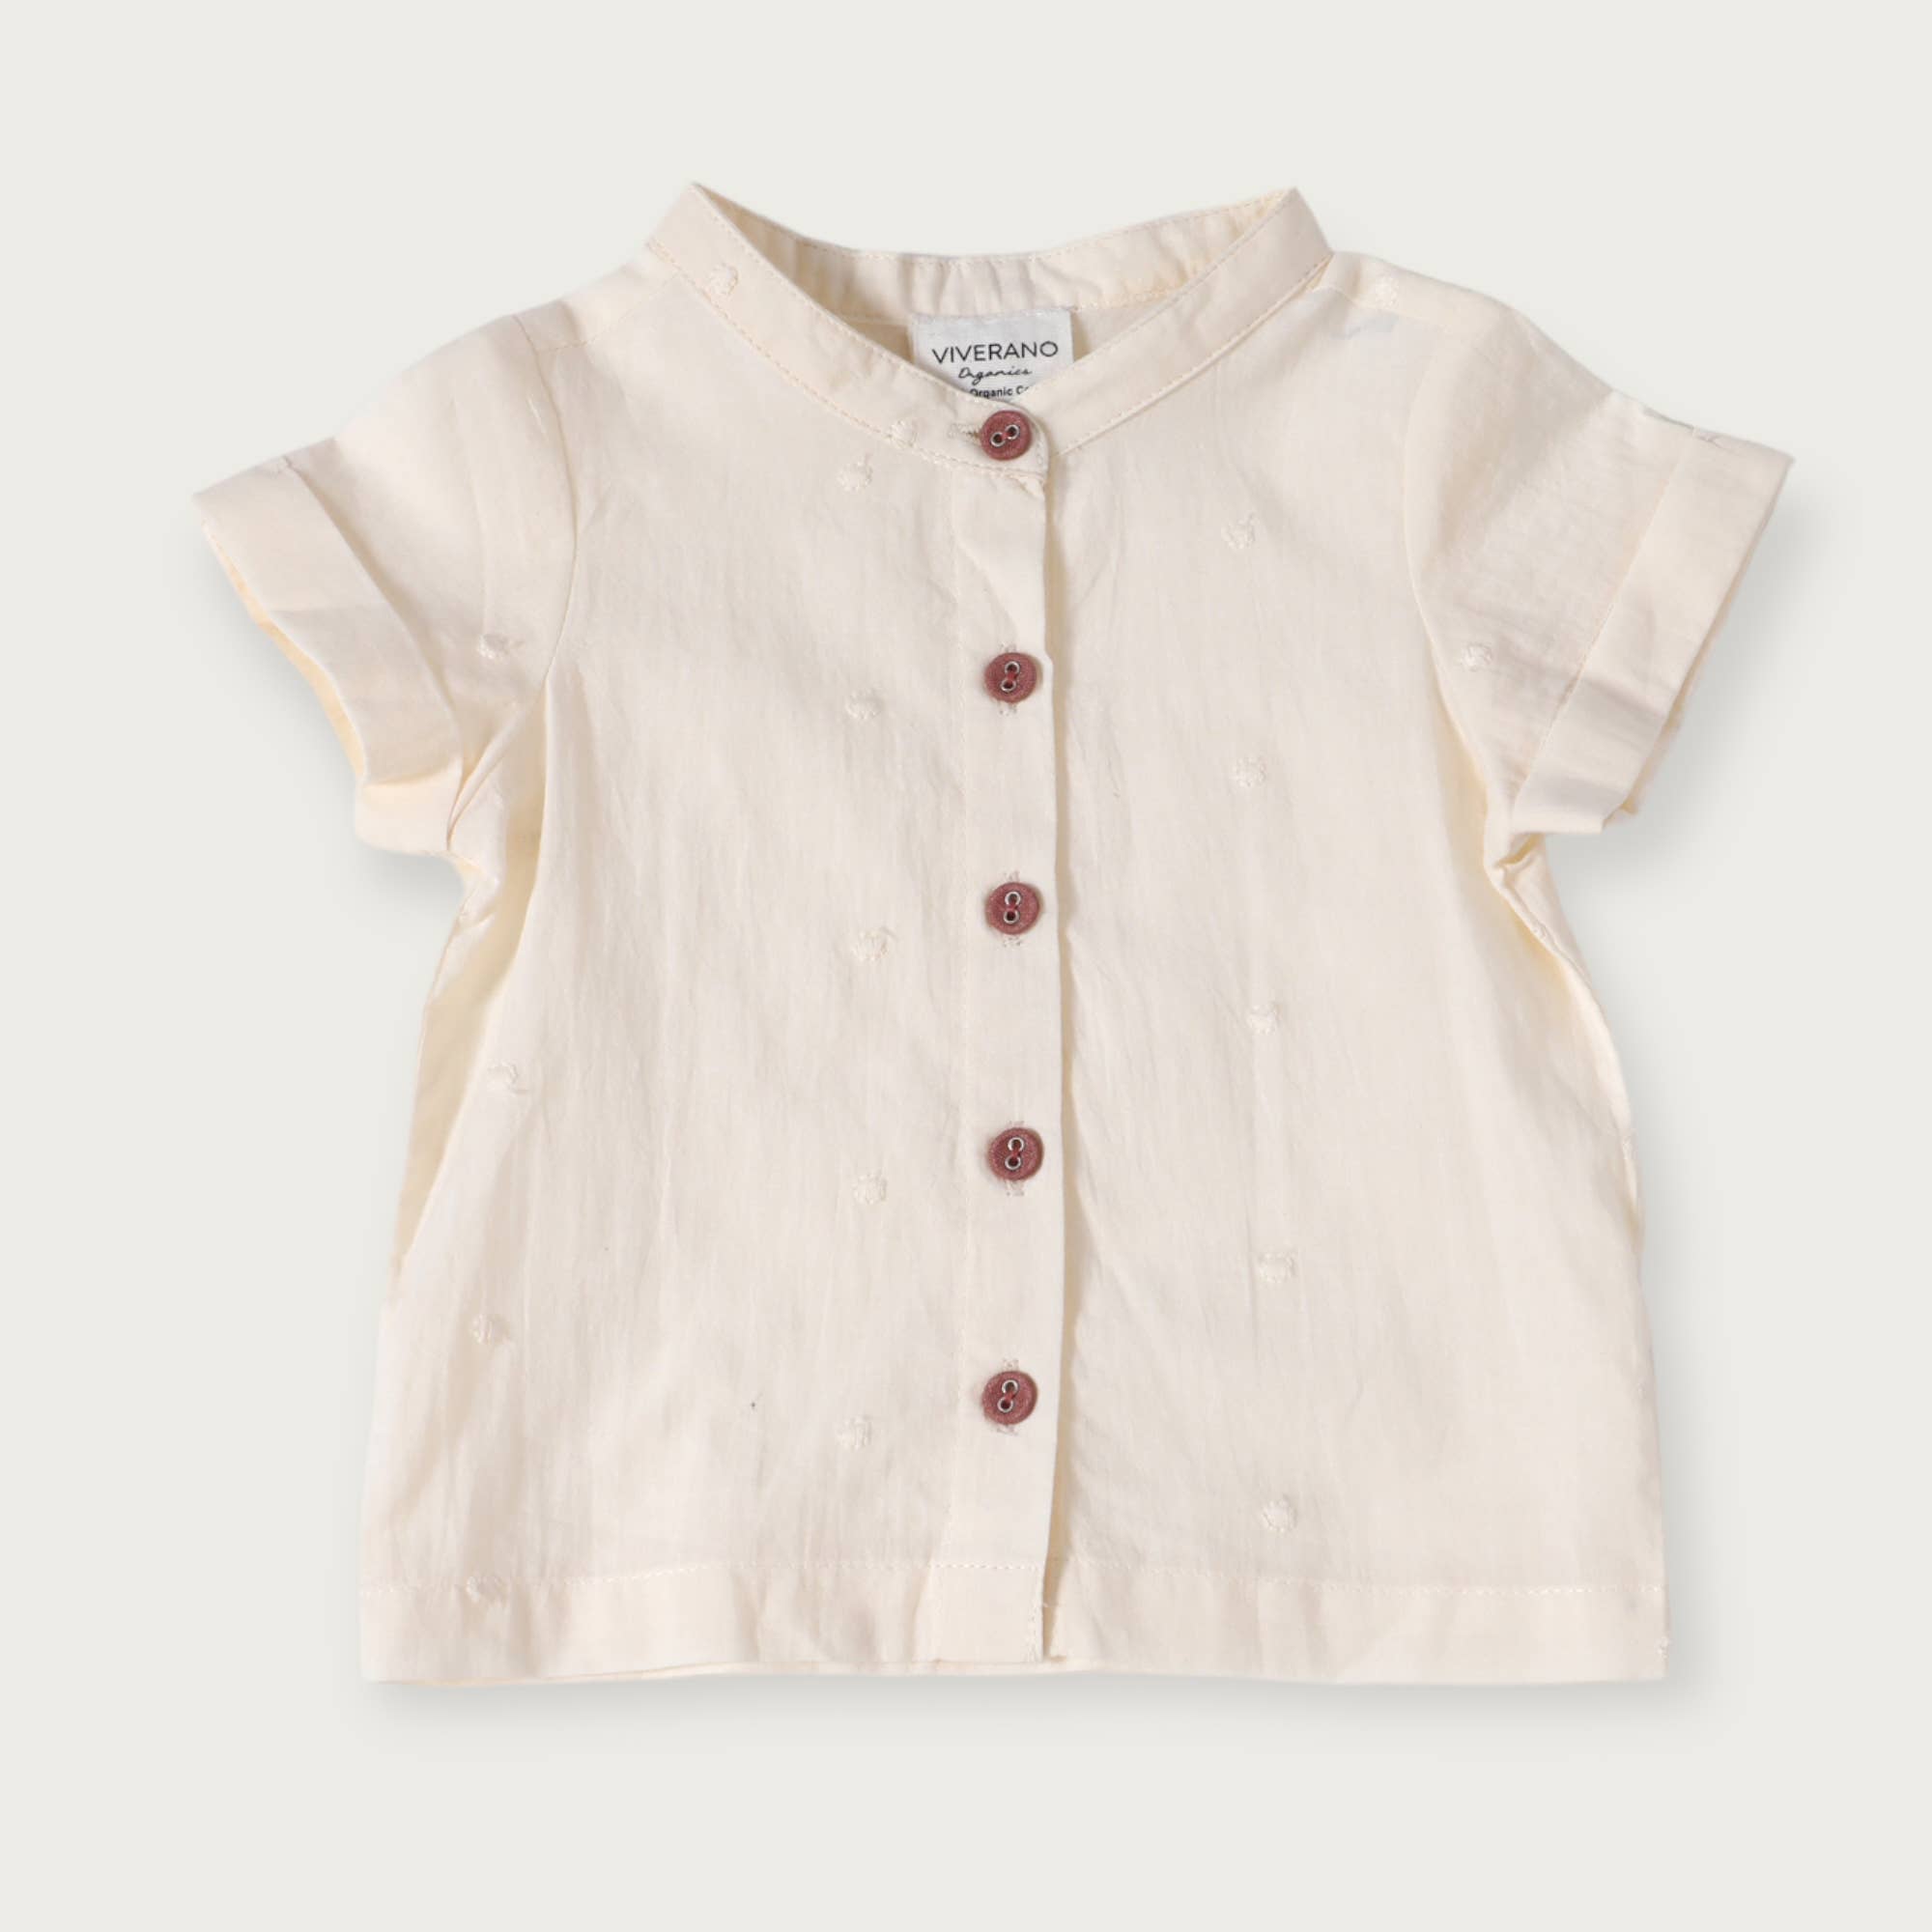 Laurence Mandarin Collar Baby Shirt + Shorts 2pc Set